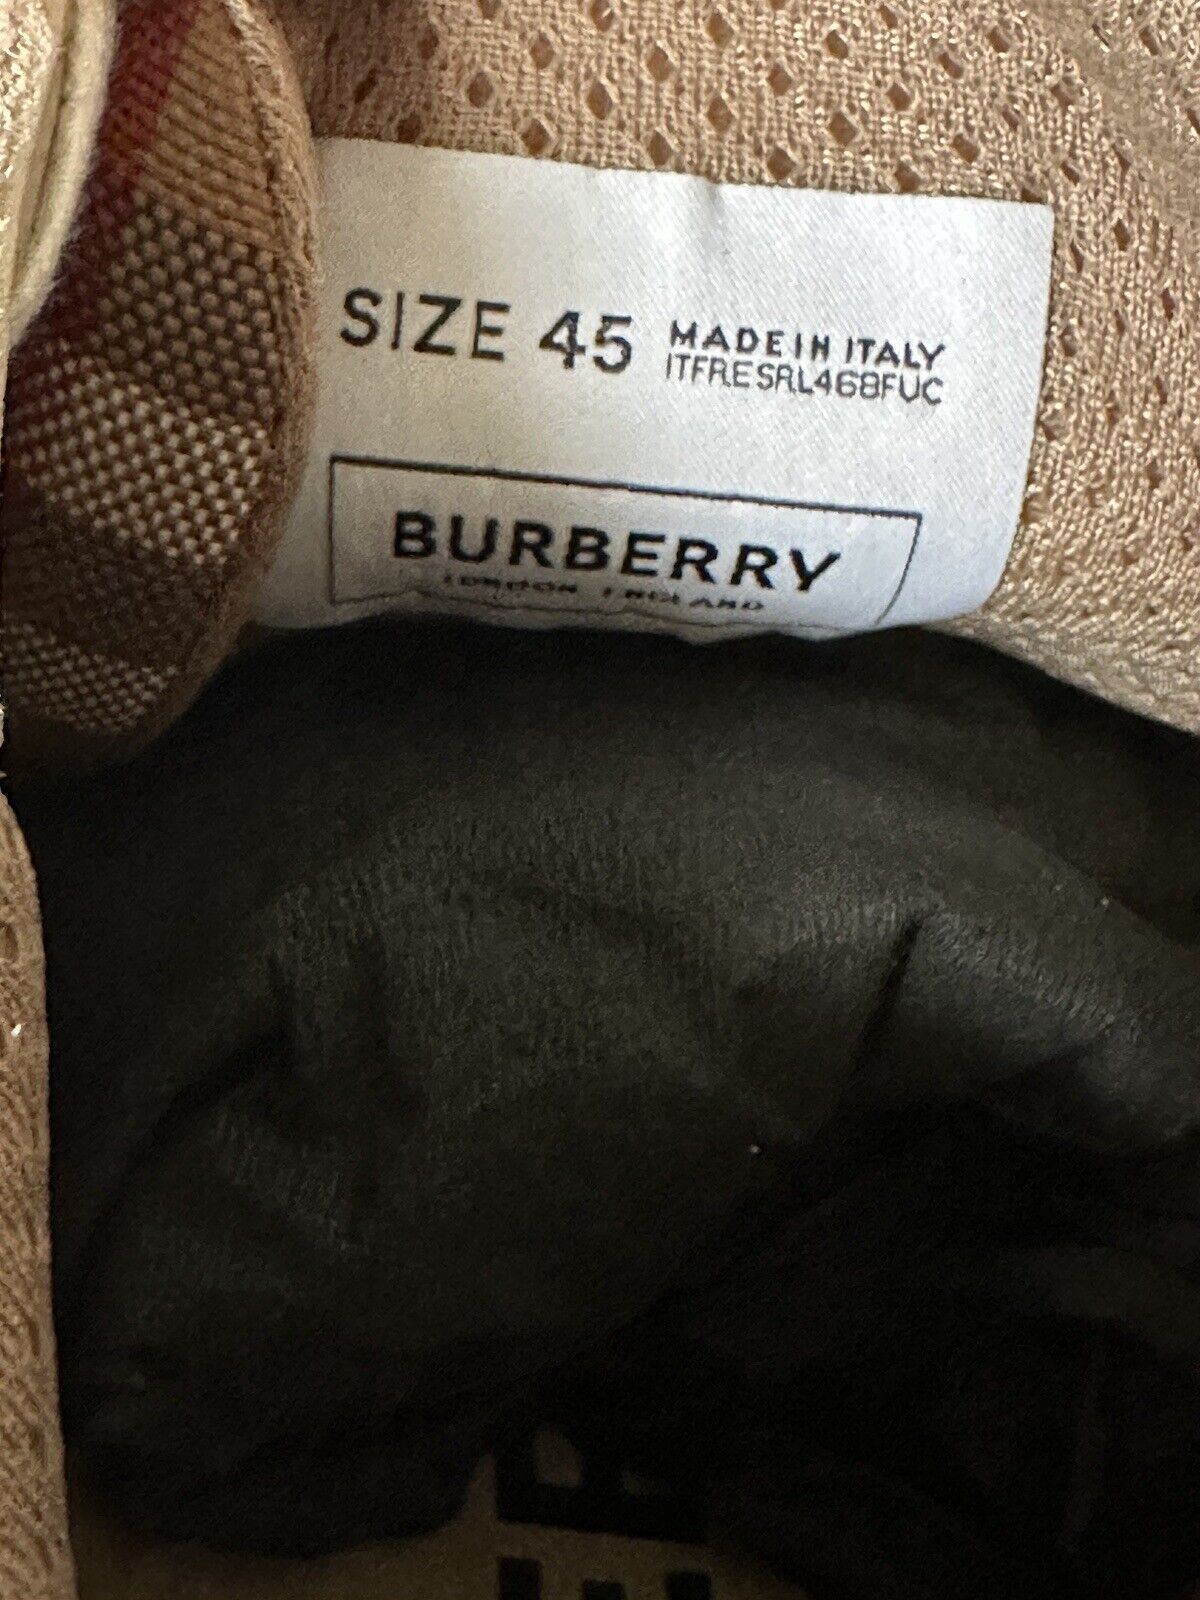 NIB 790 $ Burberry Herren Ramsey Mehrfarbige Sneakers 12 US (45 Euro) 8048632 Italien 